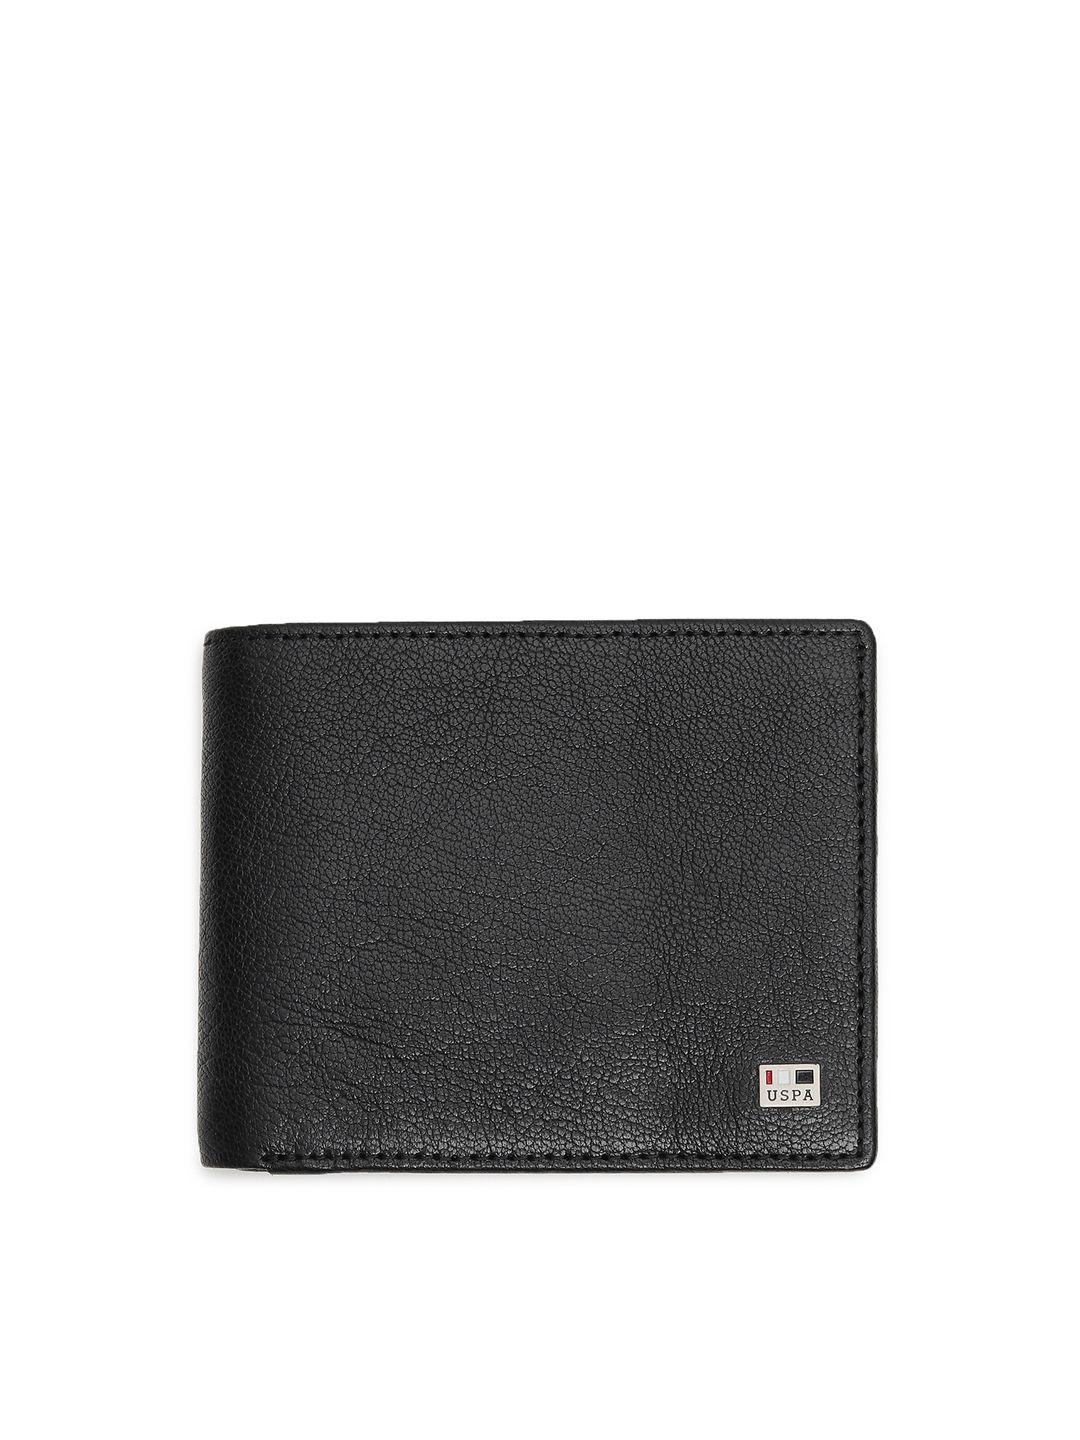 u-s-polo-assn-men-black-leather-two-fold-wallet